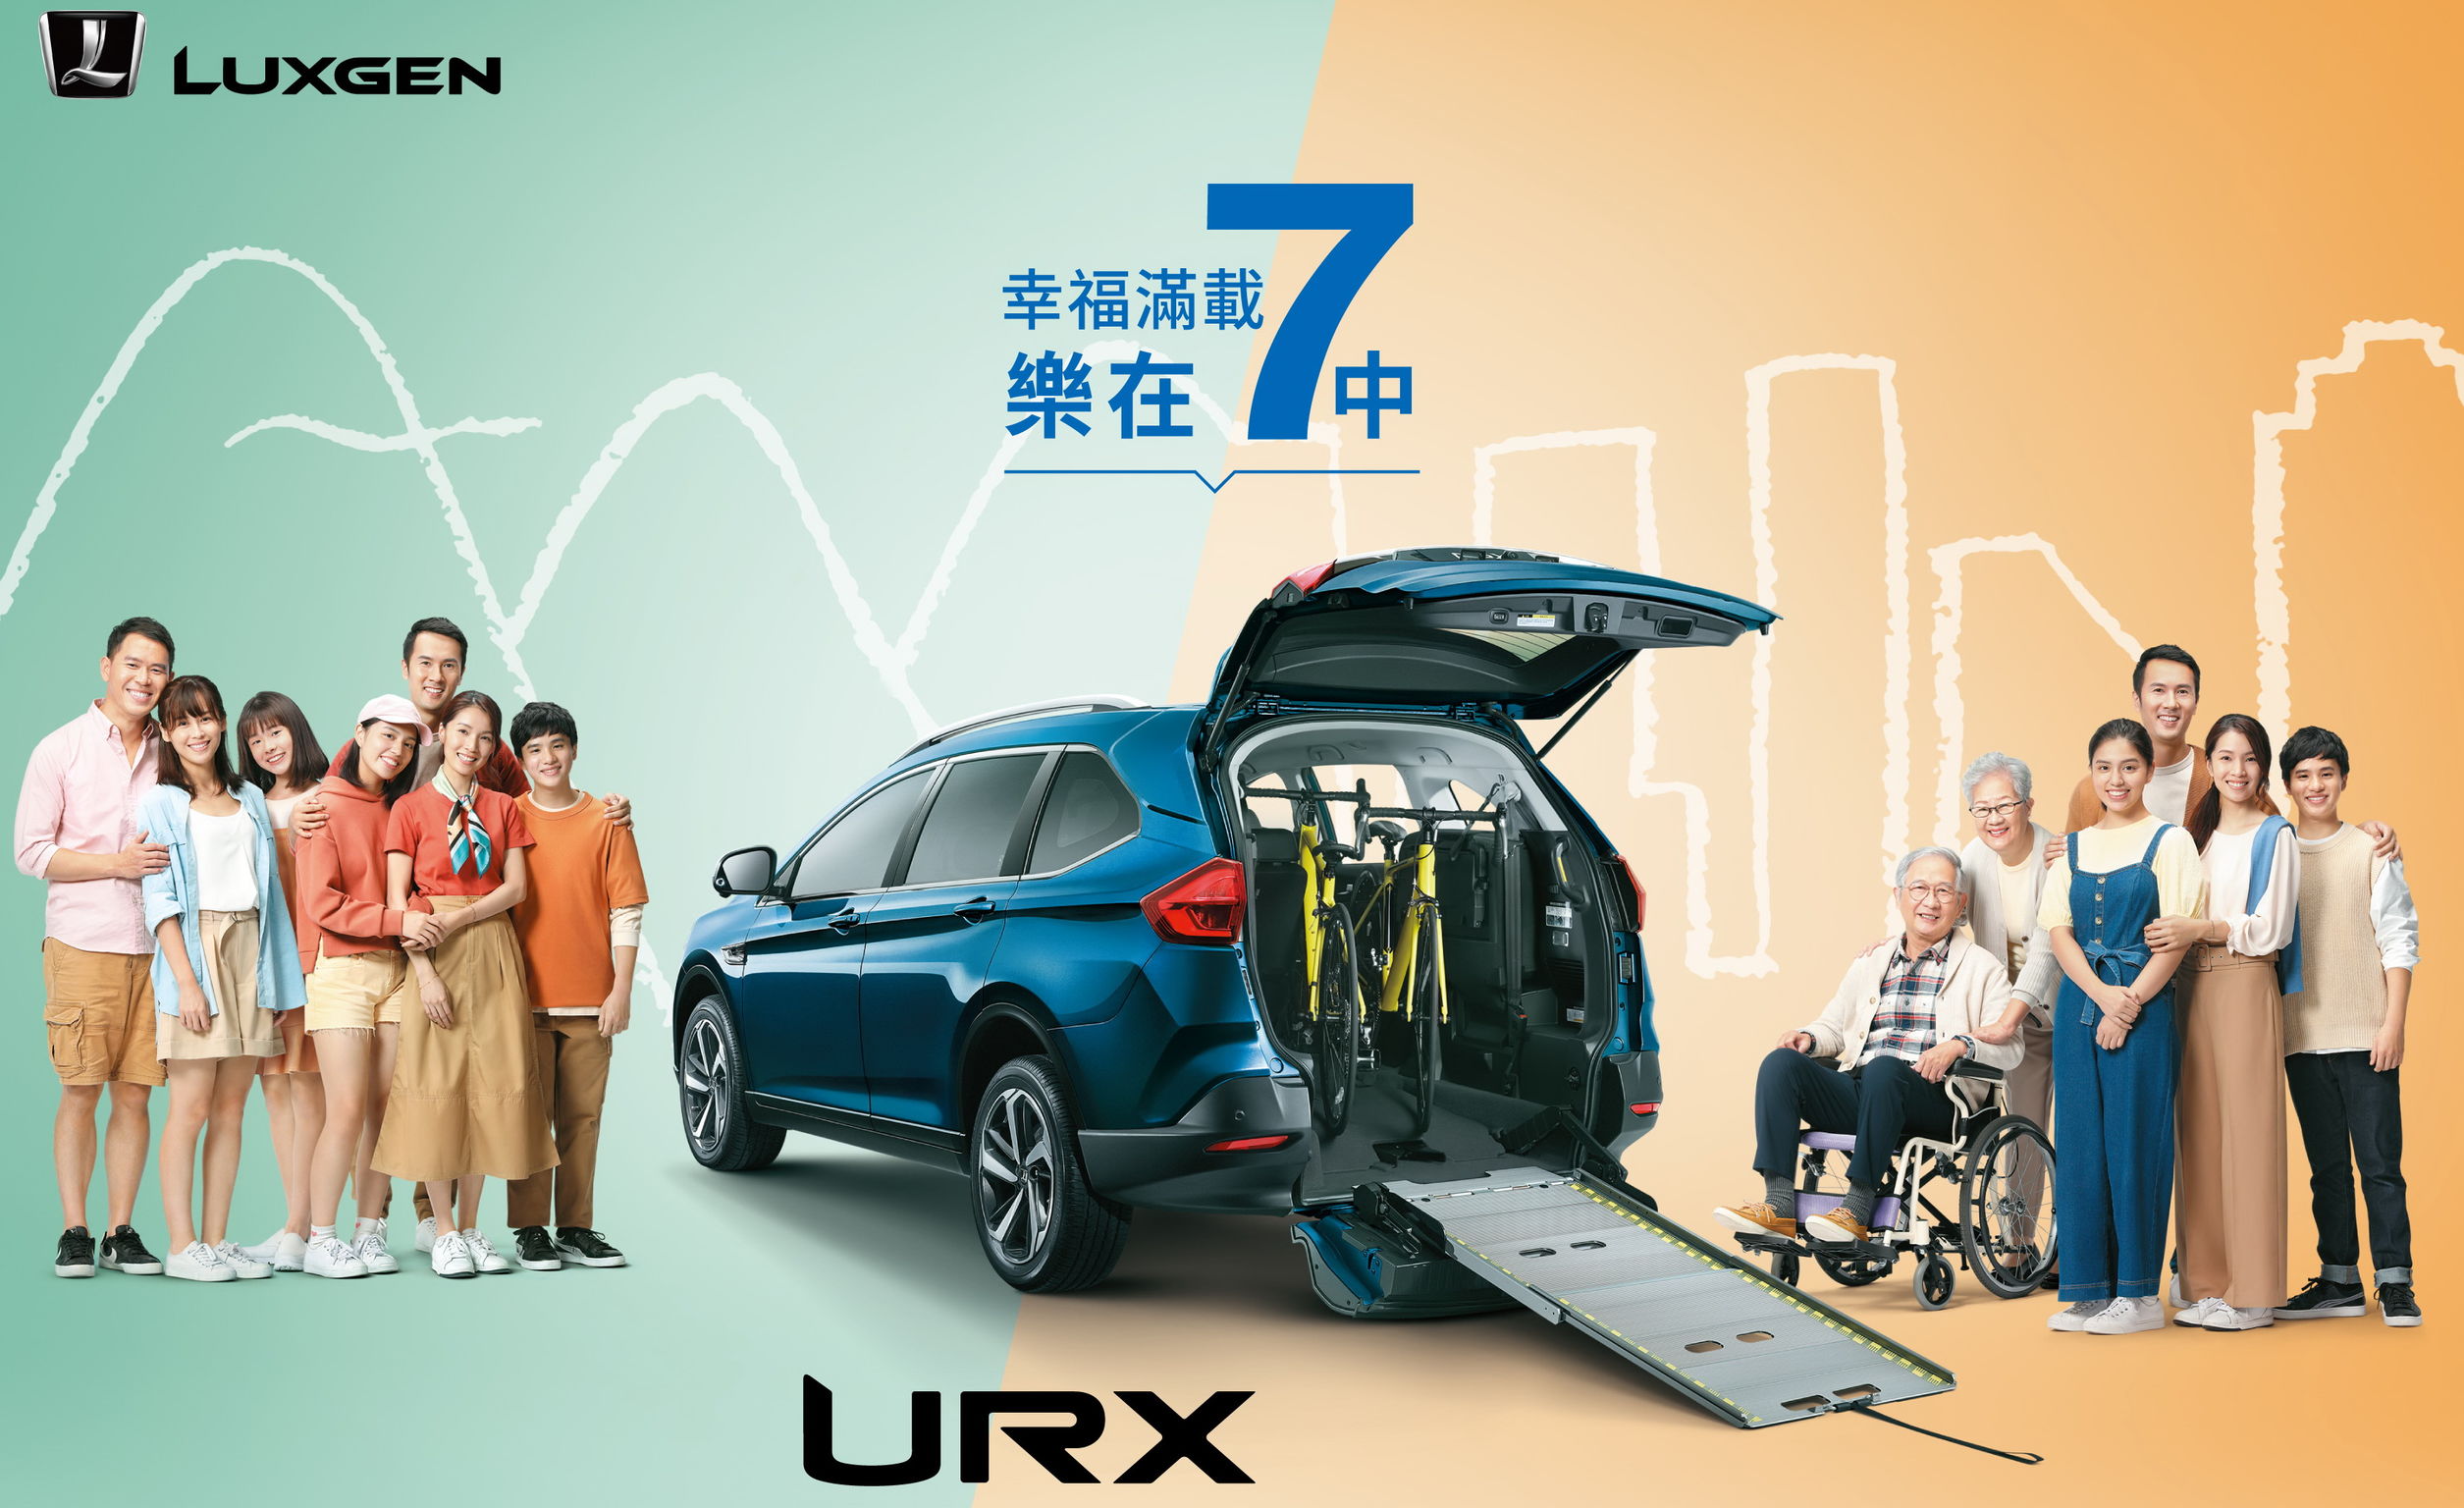 Luxgen URX - Universal Design